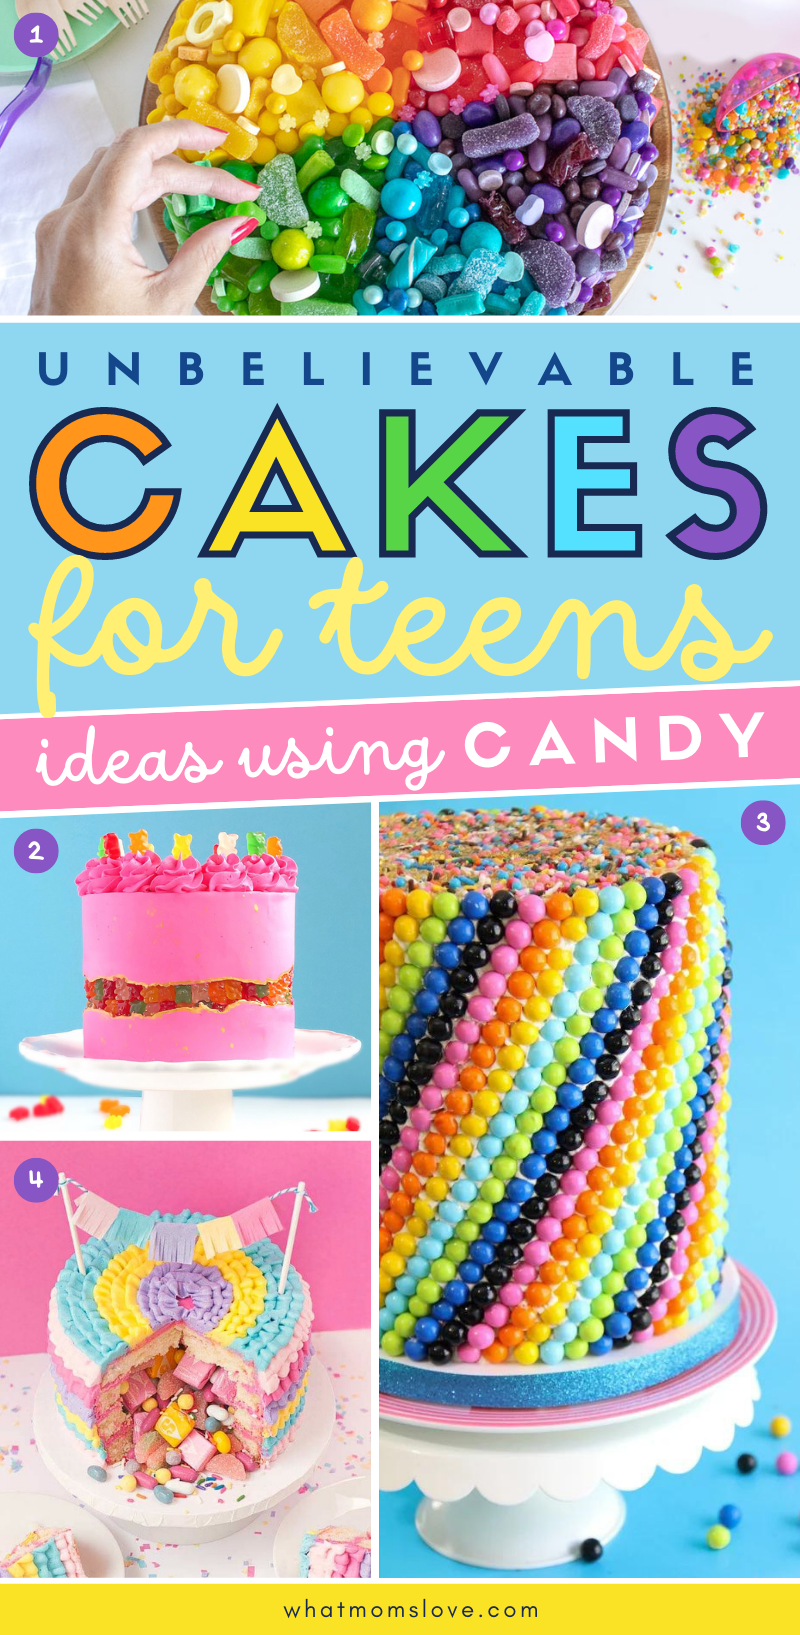 birthday cake designs for teenage girls